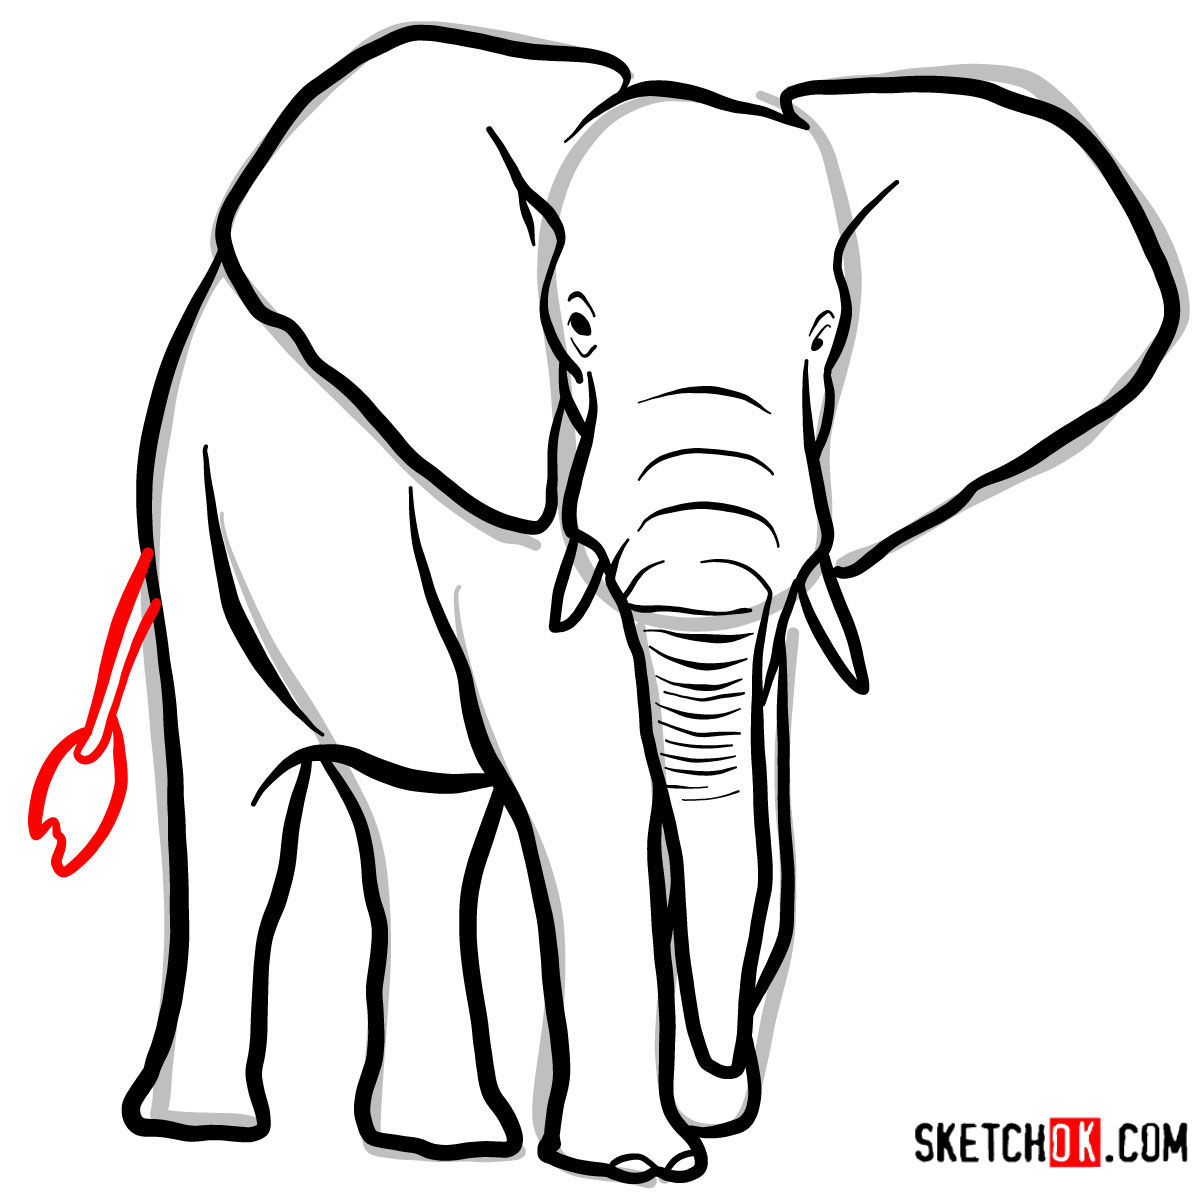 How to Draw an Elephant (Cartoon) - YouTube